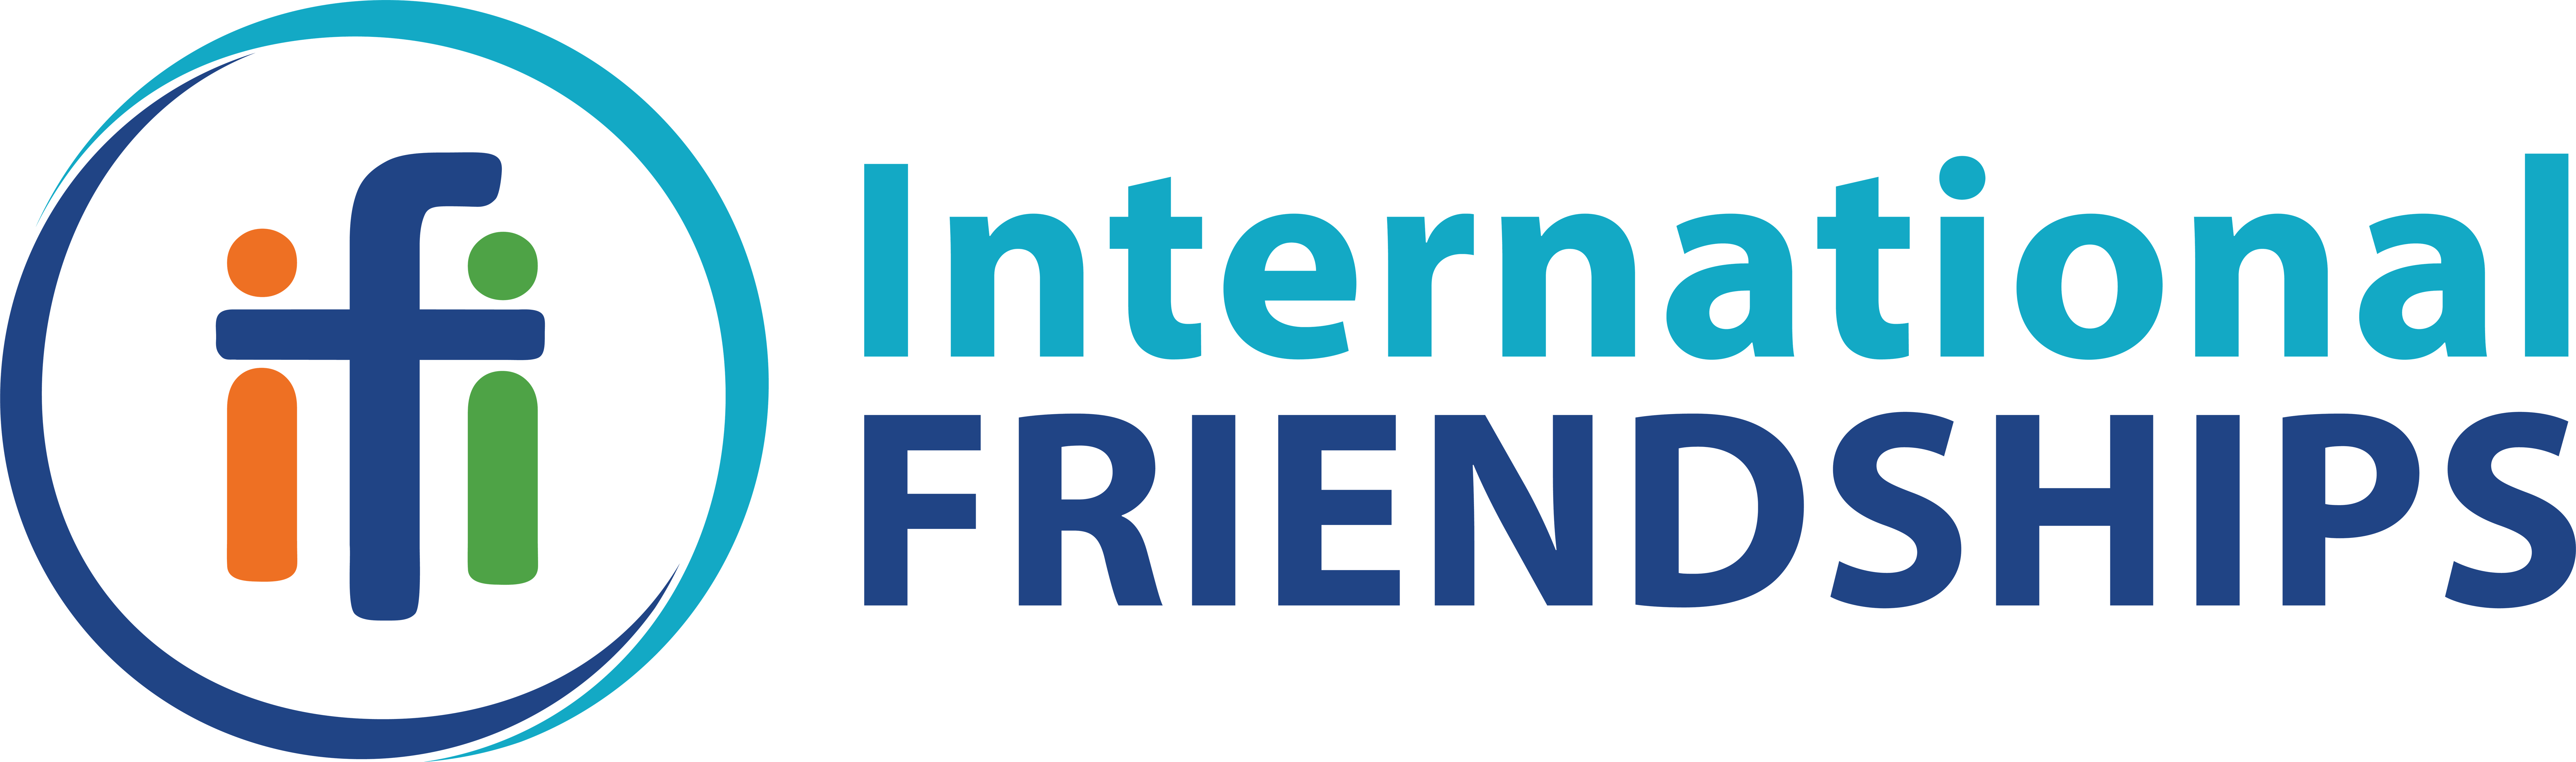 International Friendships, Inc.